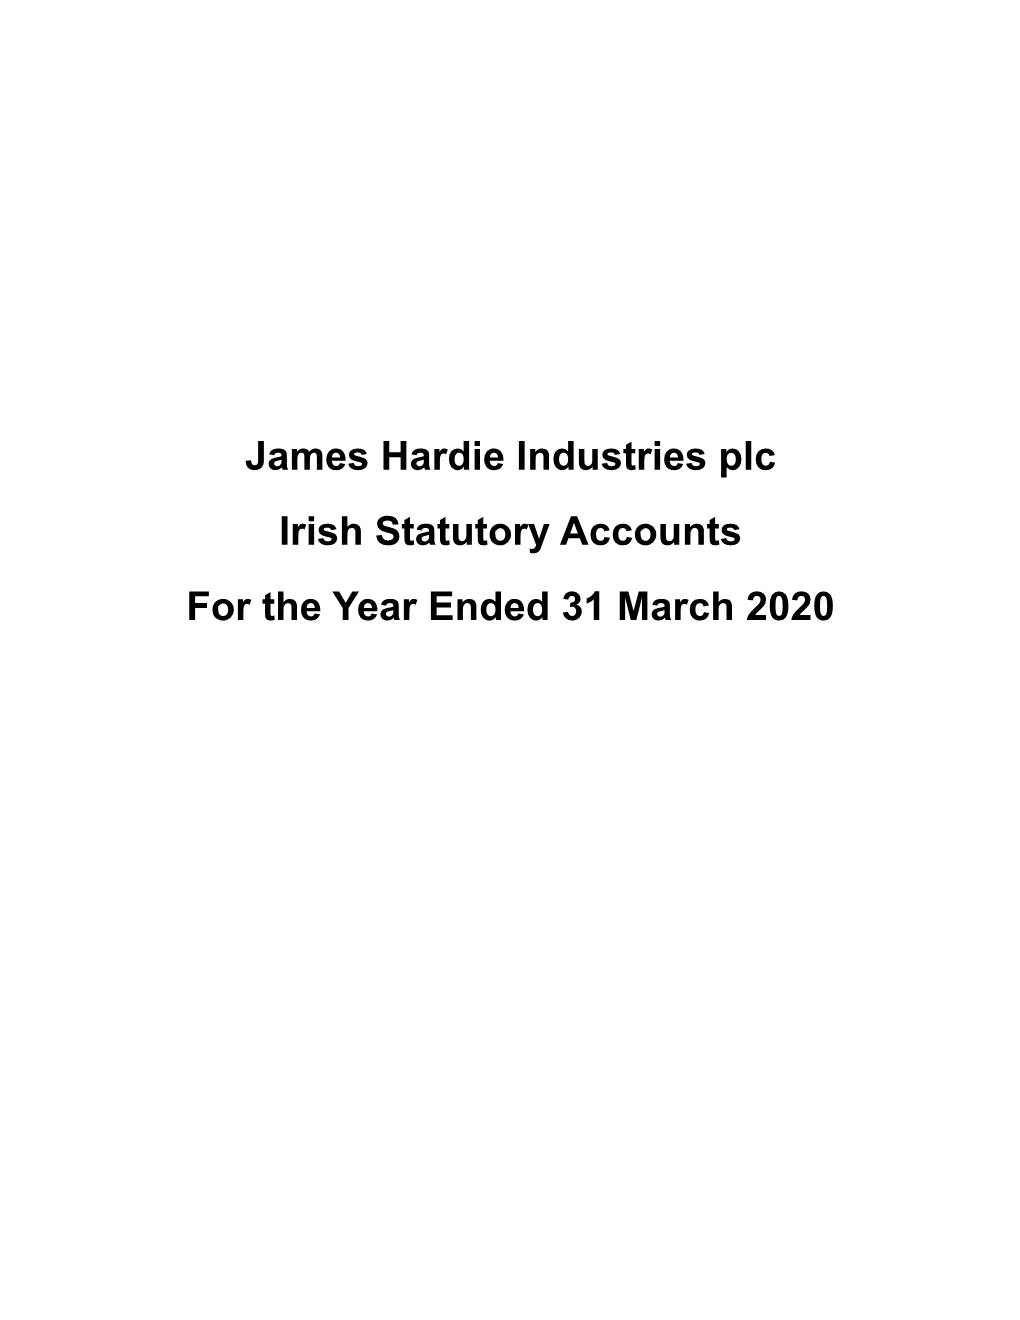 James Hardie Industries Plc Irish Statutory Accounts for the Year Ended 31 March 2020 James Hardie Industries Plc